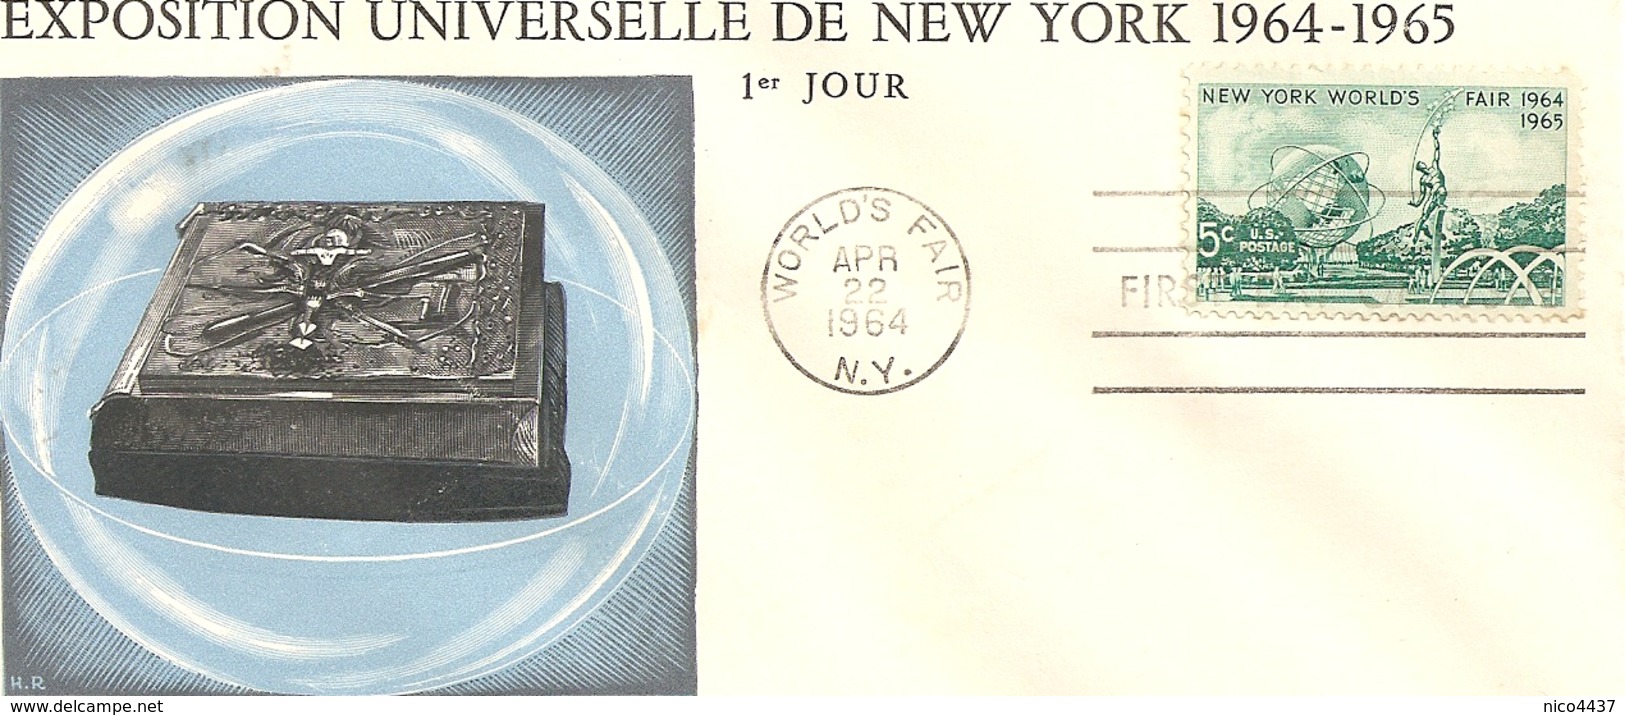 Enveloppe Exposition Universelle De New York 1964 1965 1 Er Jour - Sammlungen & Lose